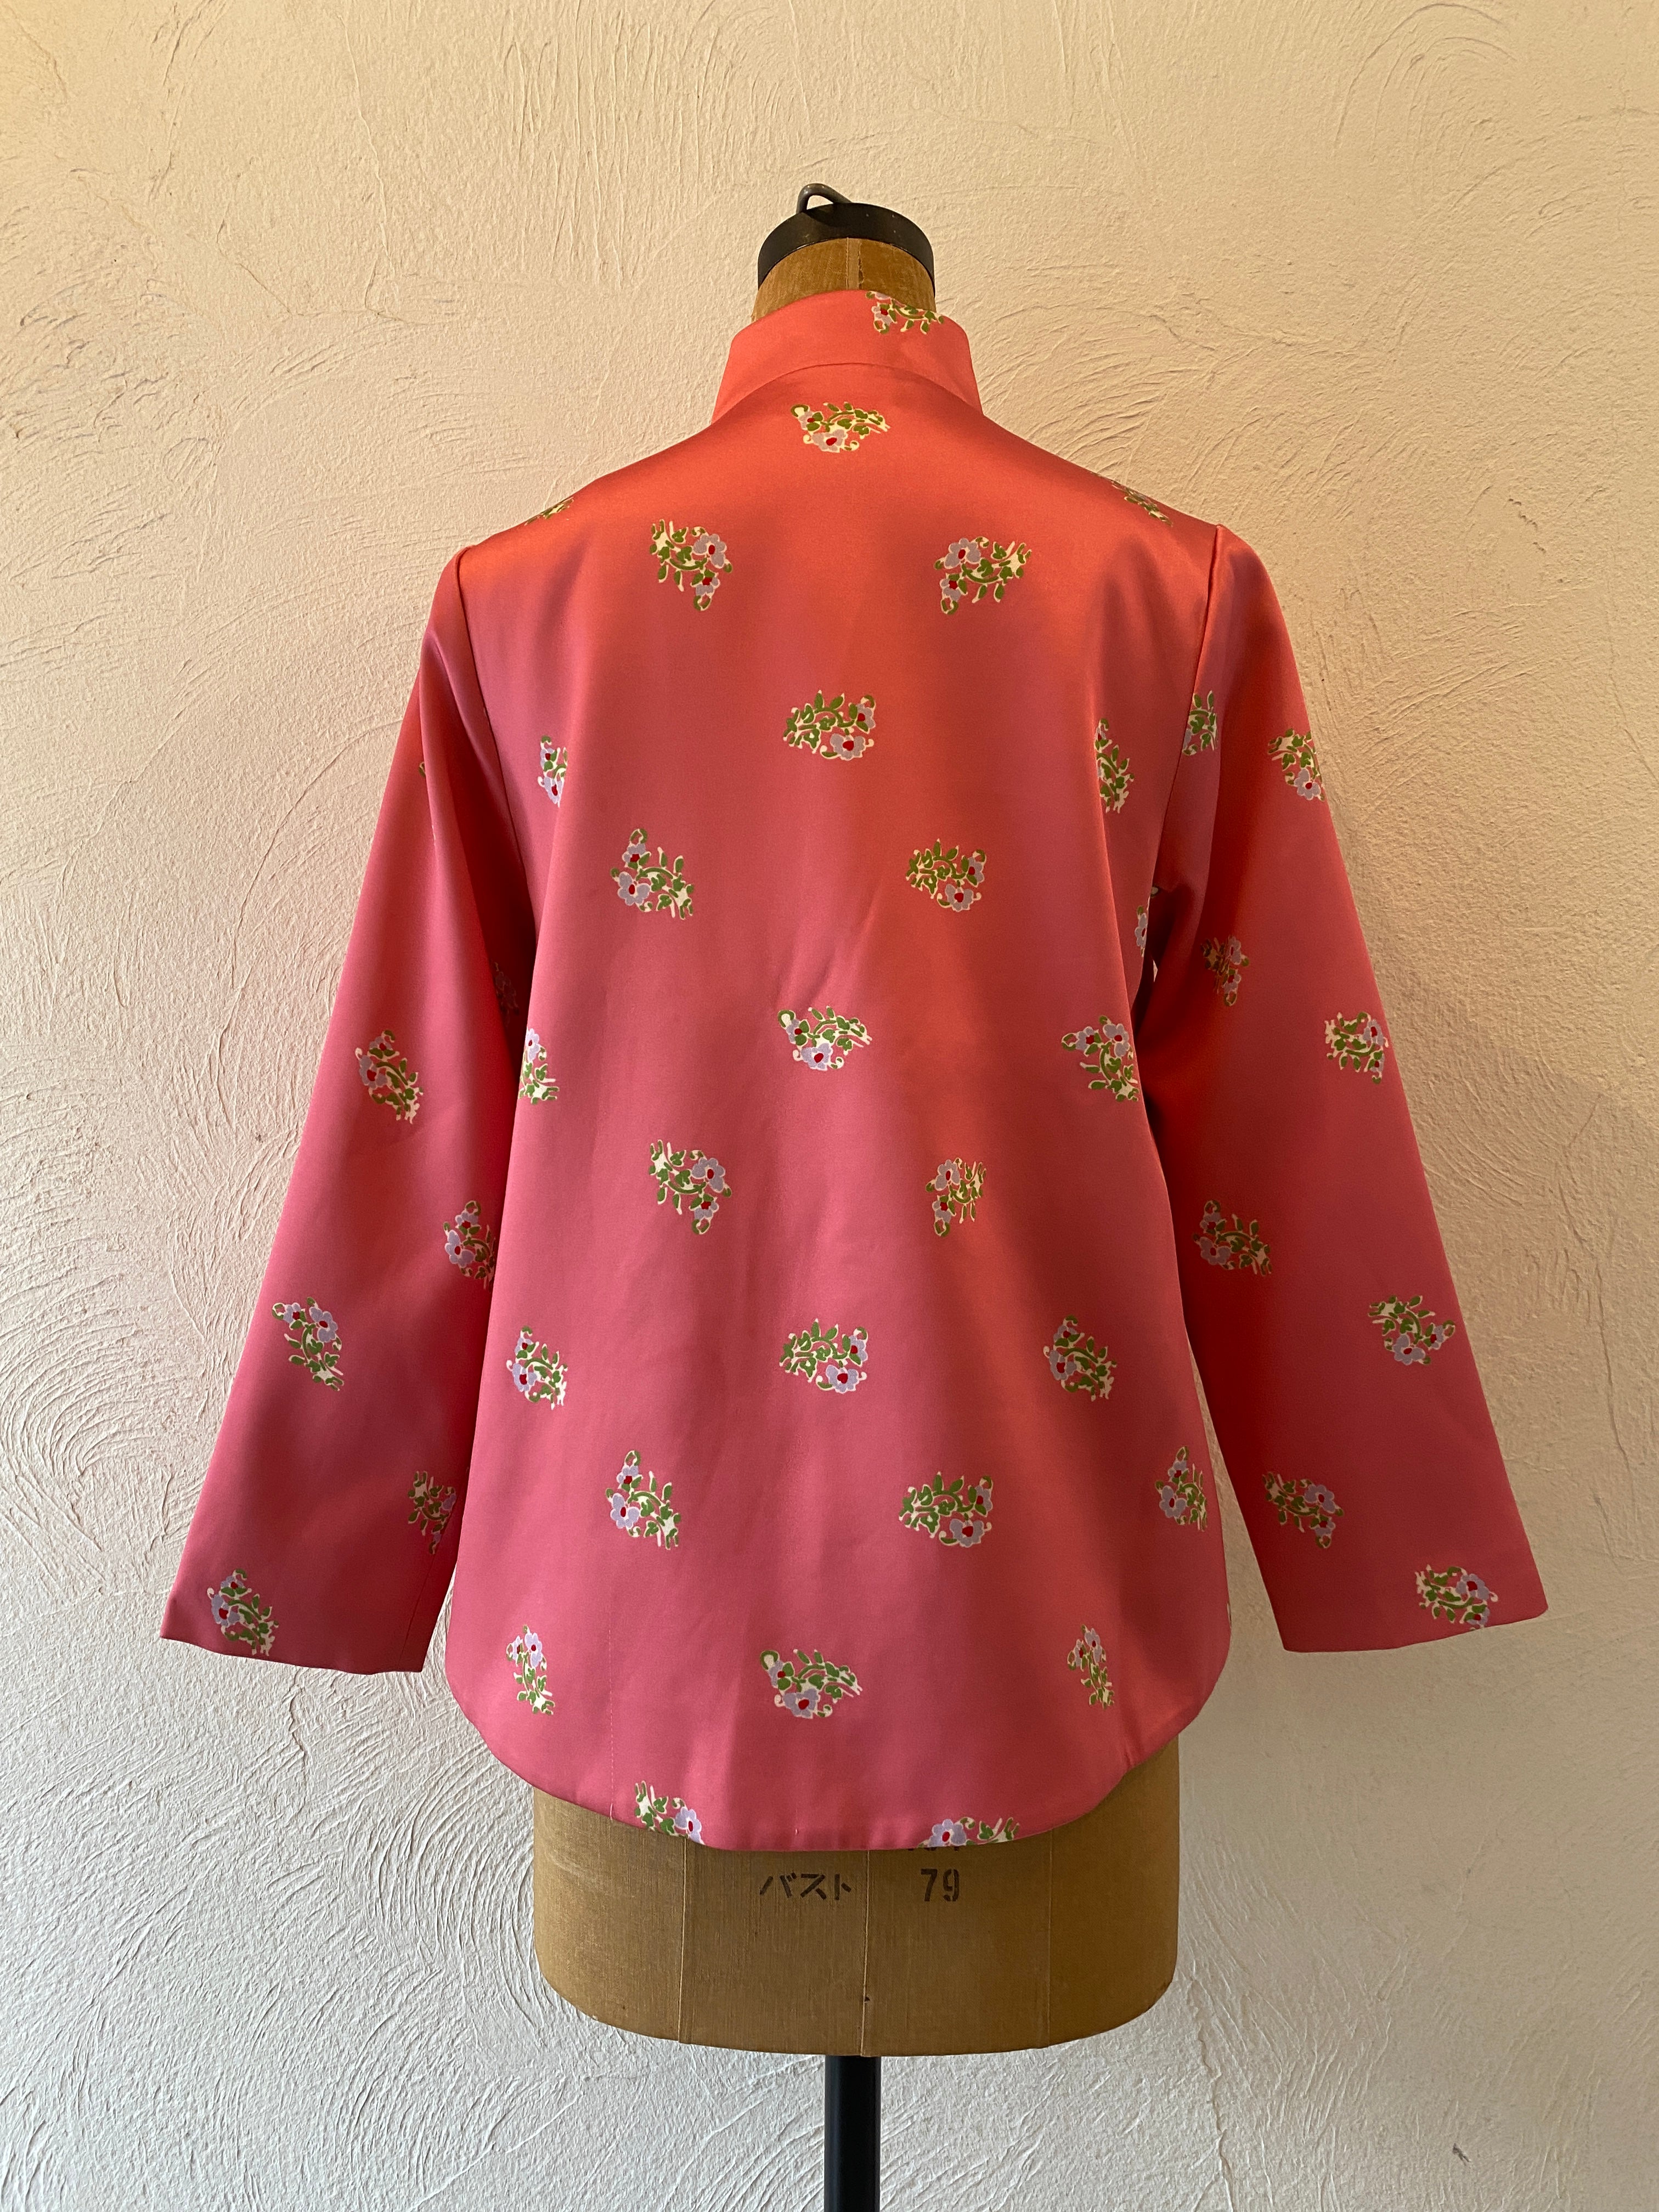 pink china jacket